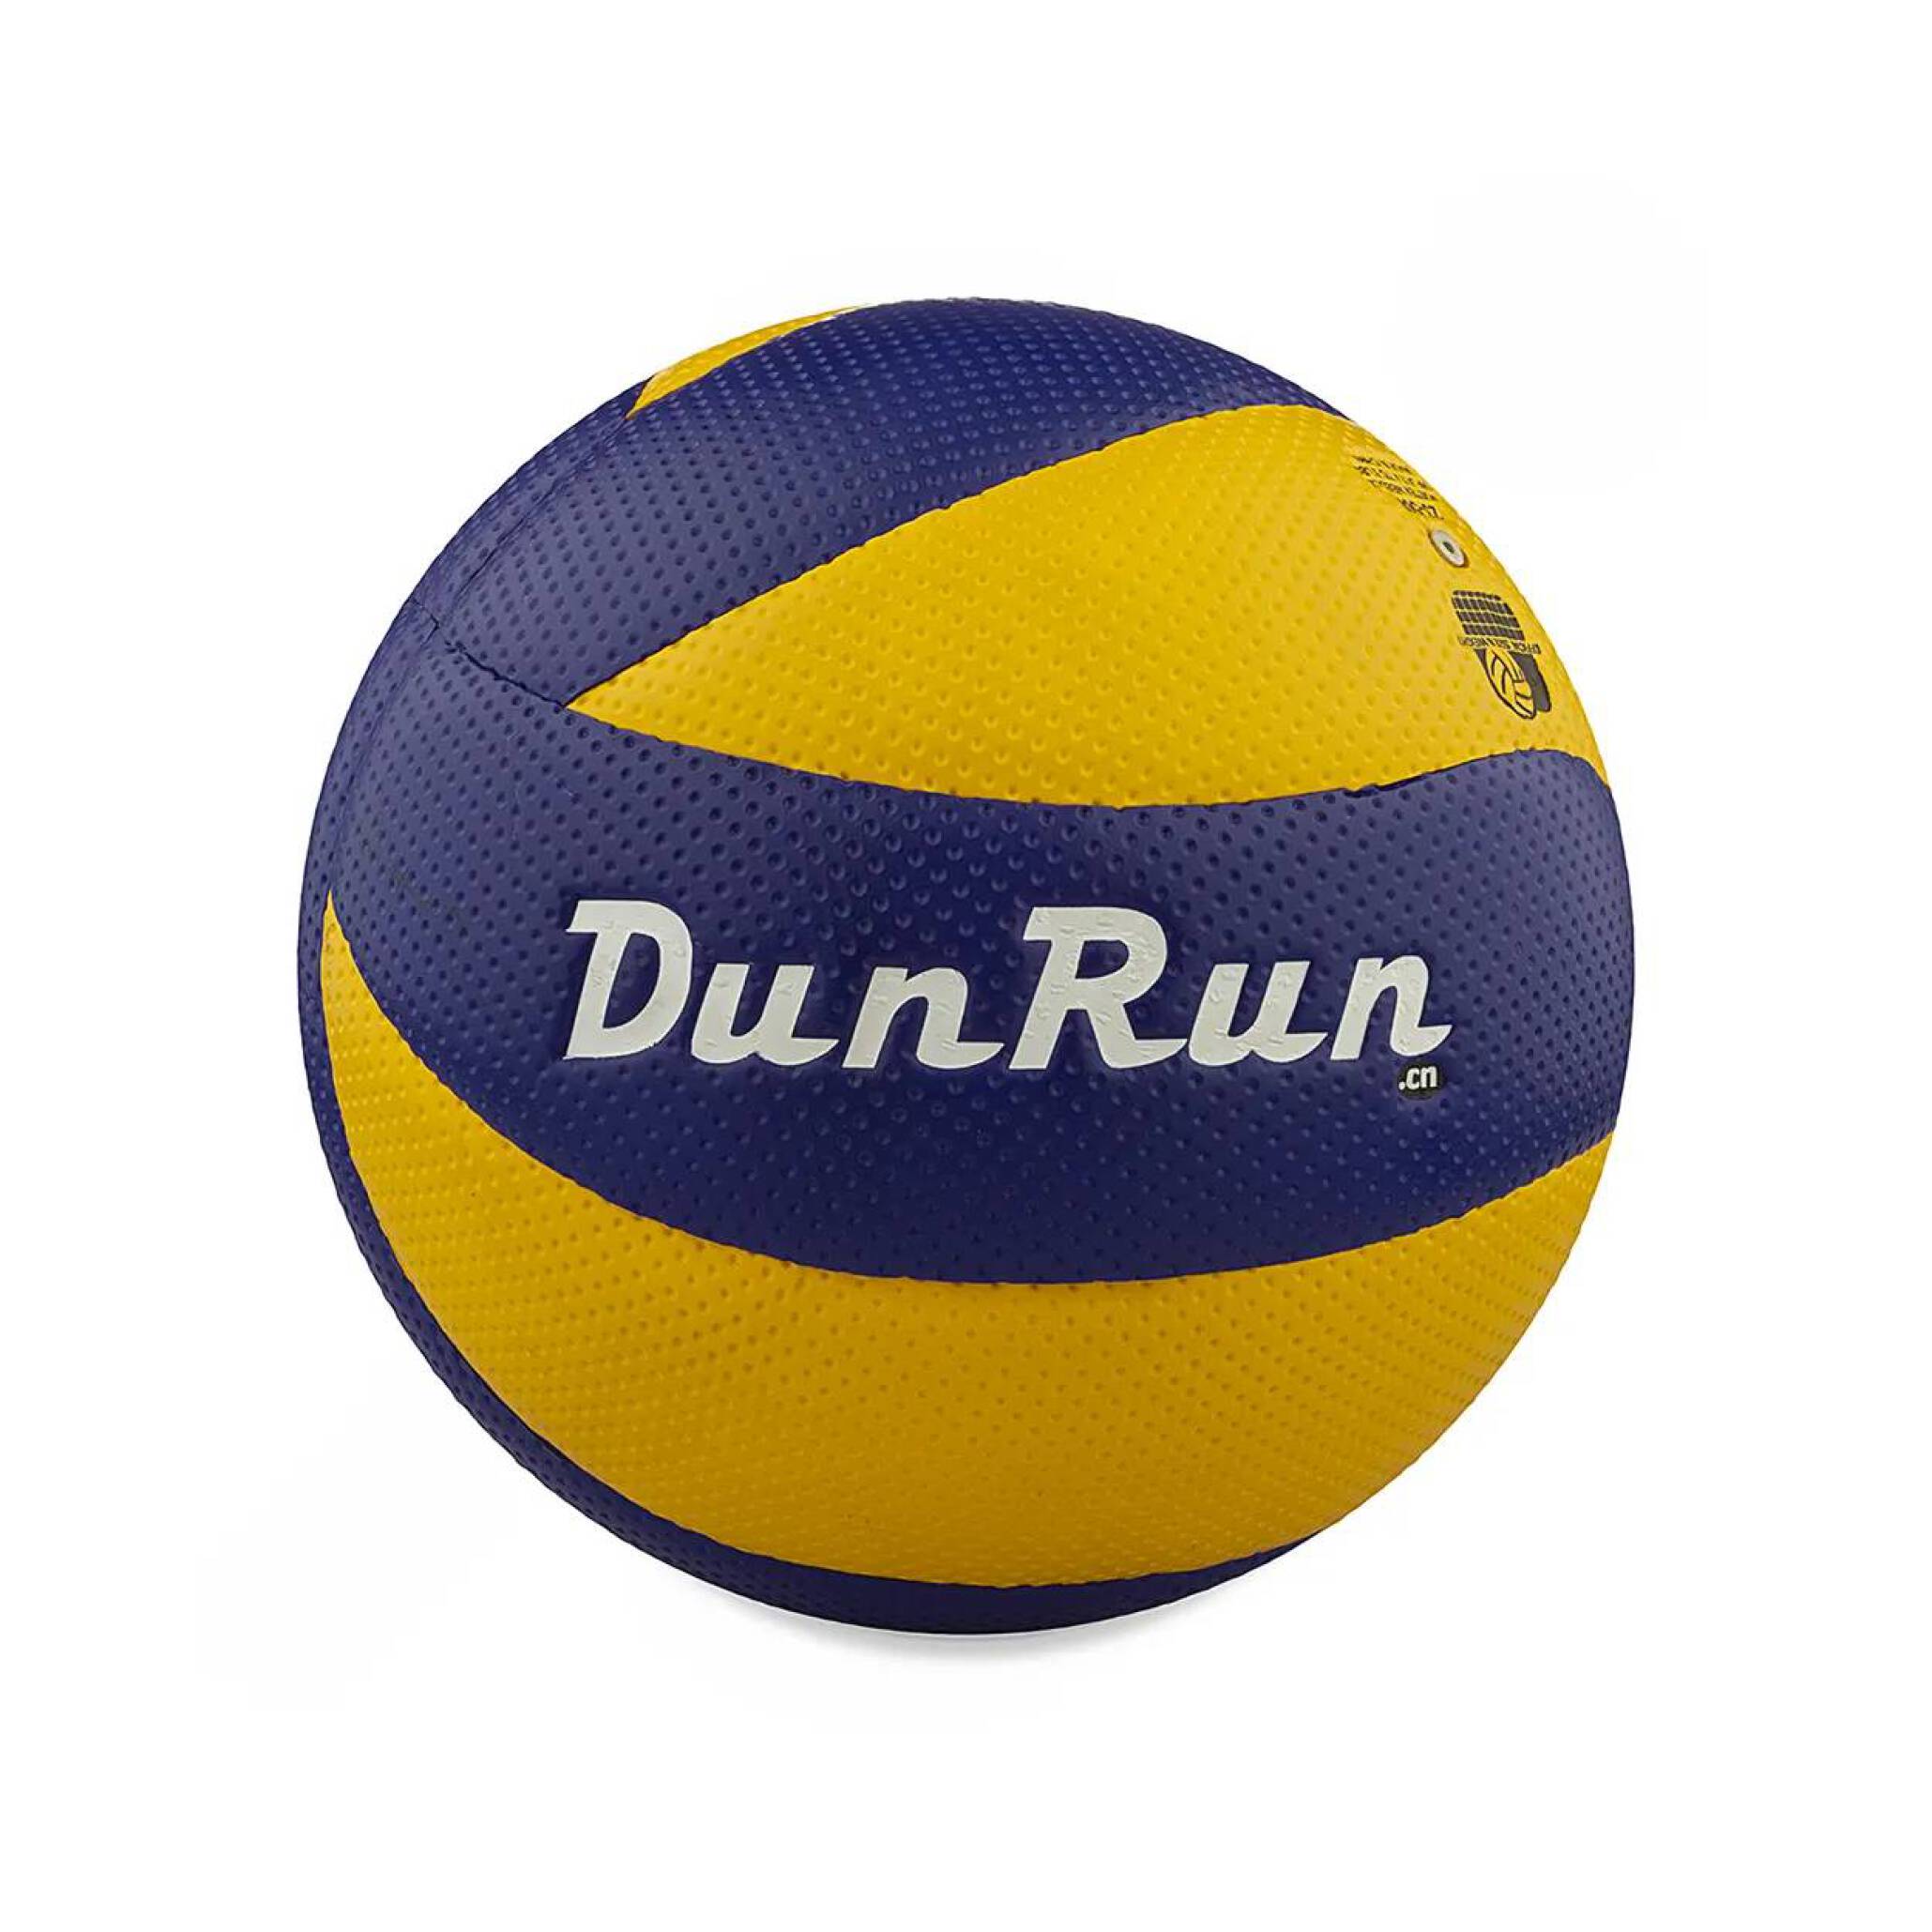  قیمت توپ والیبال dunrun 23-508 